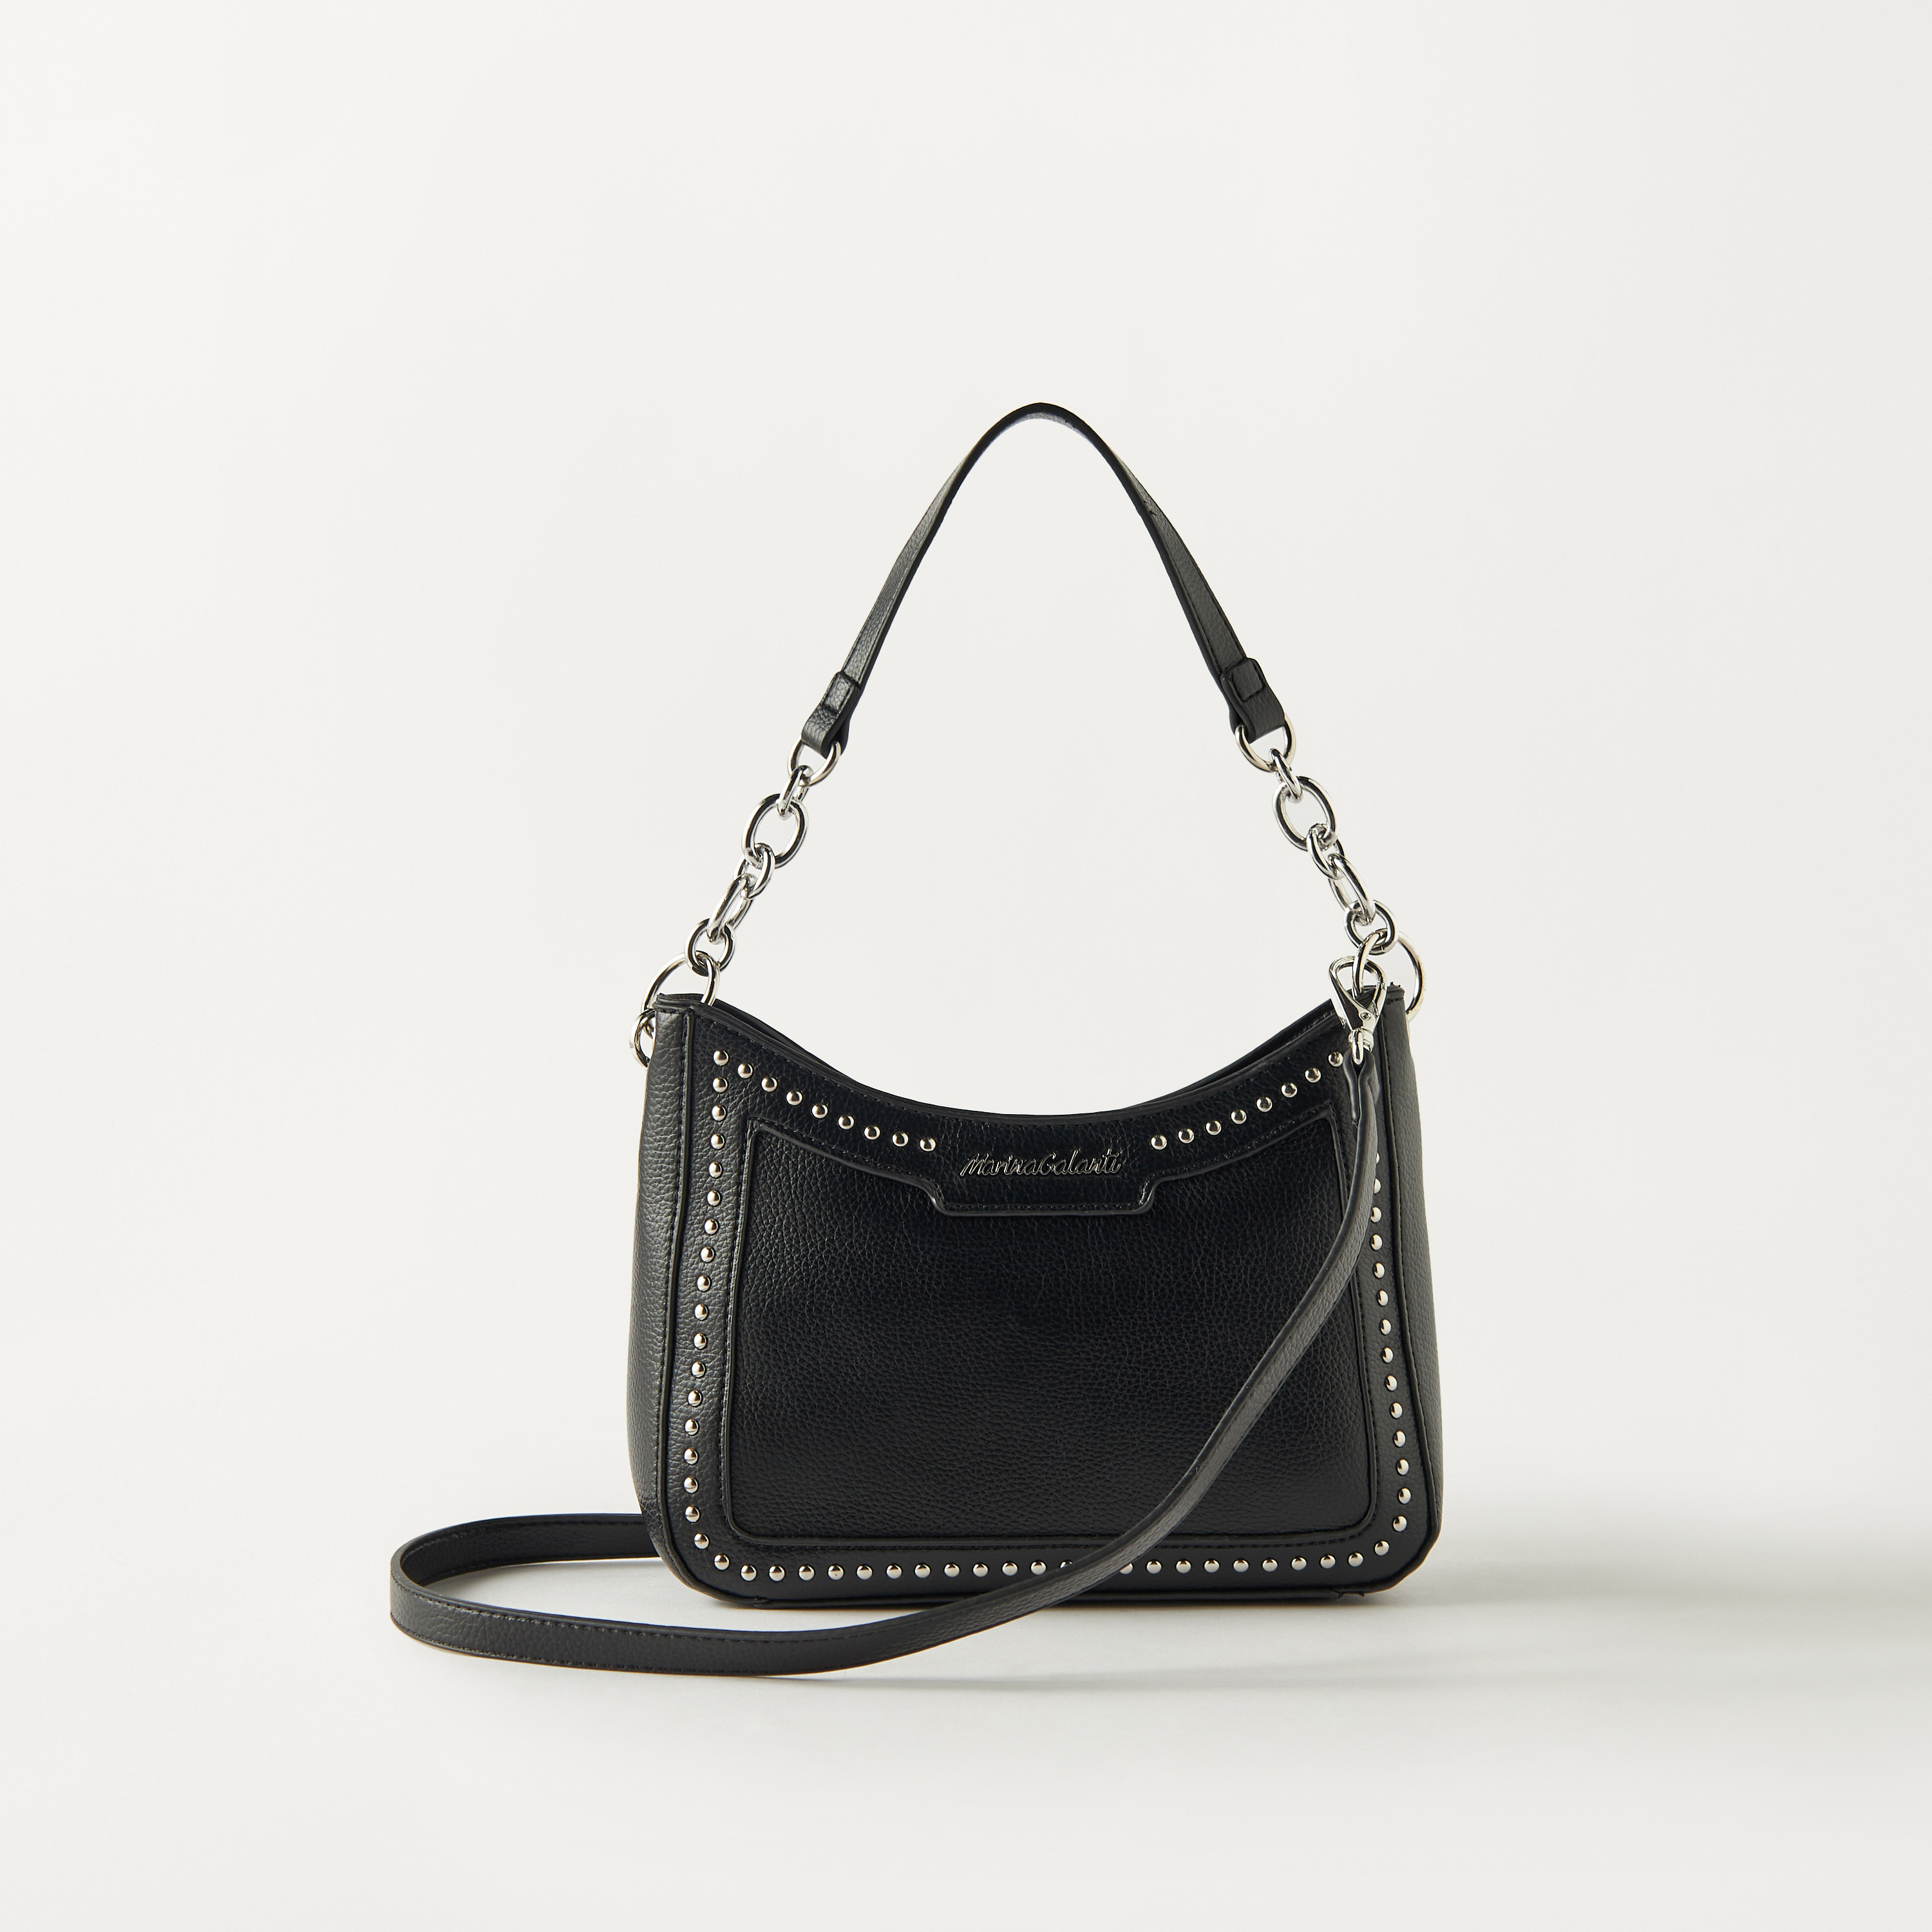 Buy Women's Marina Galanti Embellished Shoulder Bag with Zip